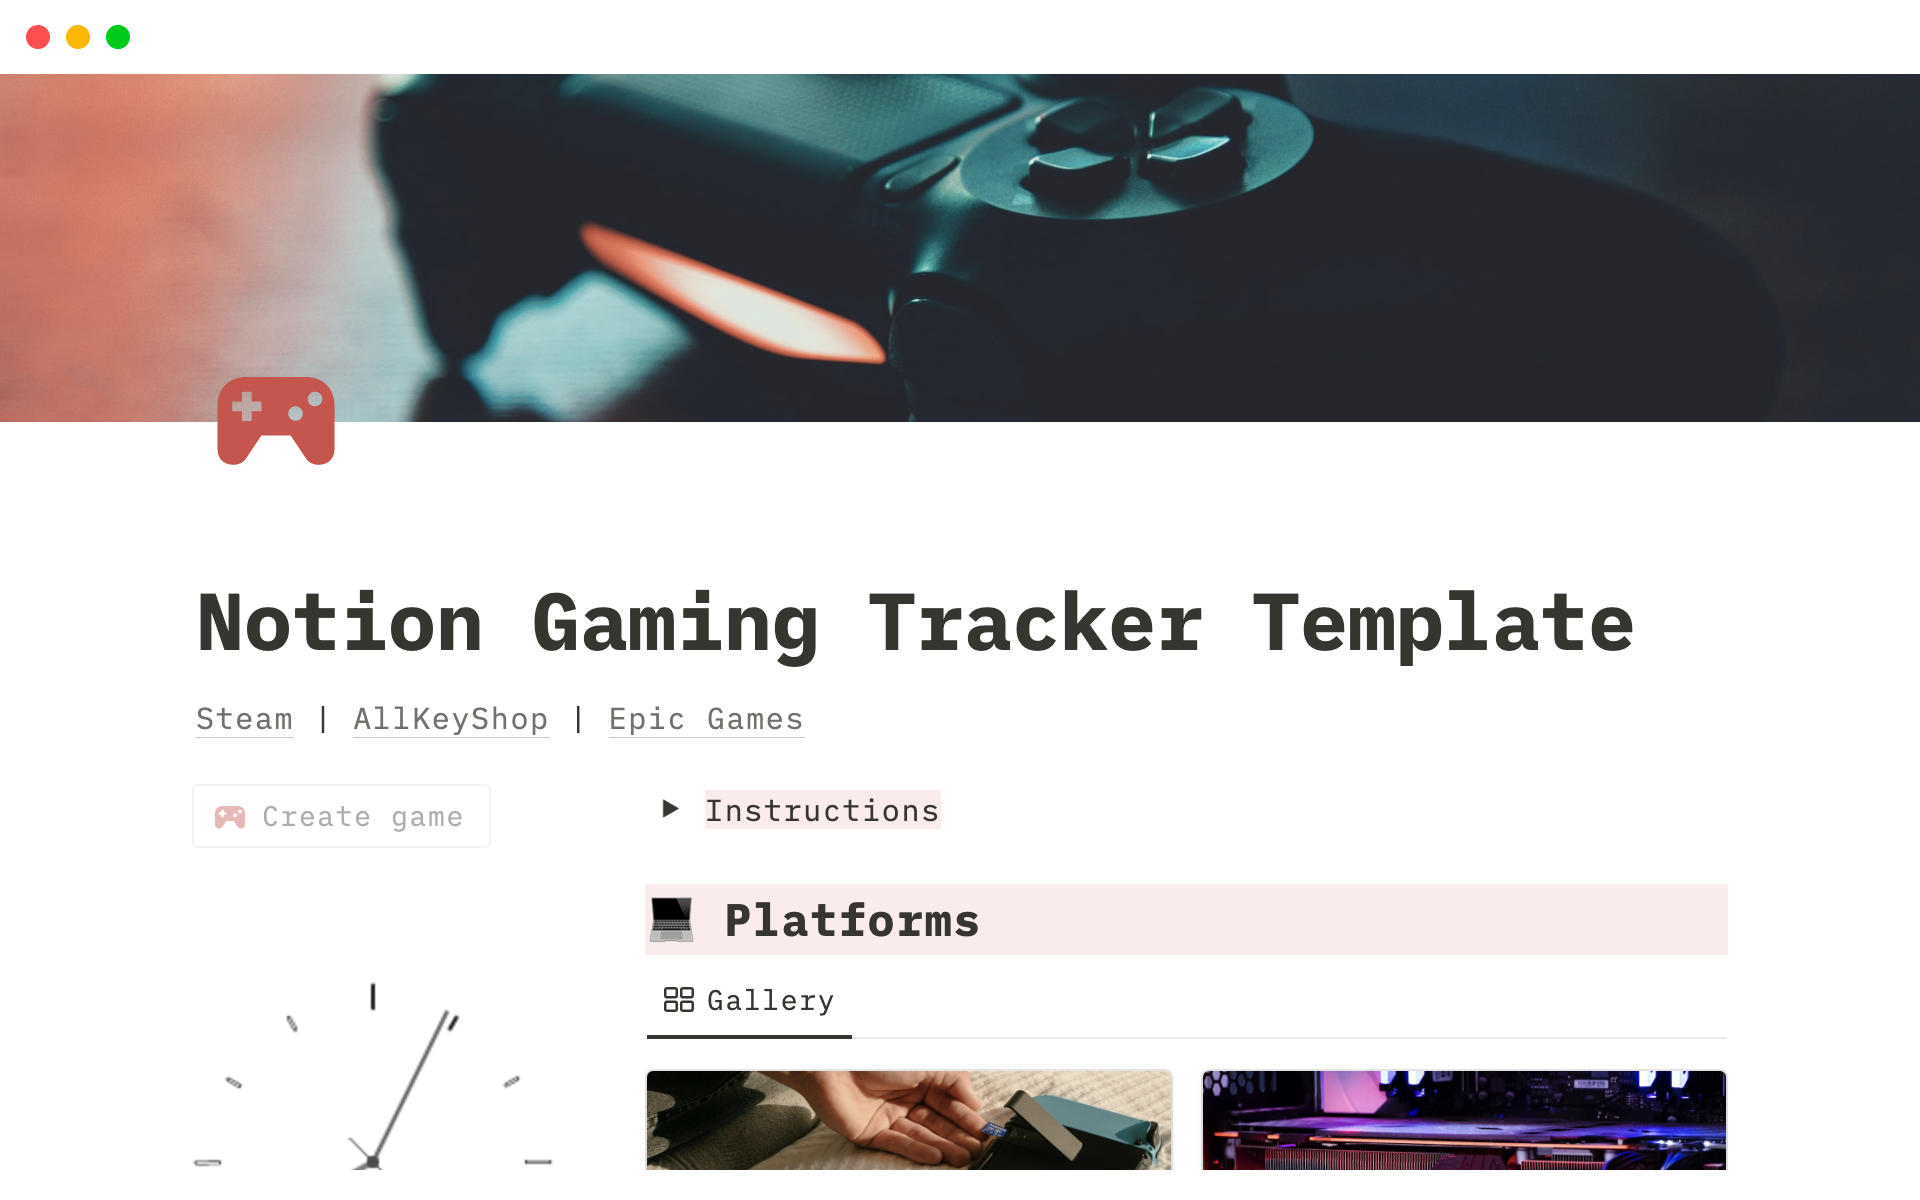 Aperçu du modèle de Notion Gaming Tracker Template